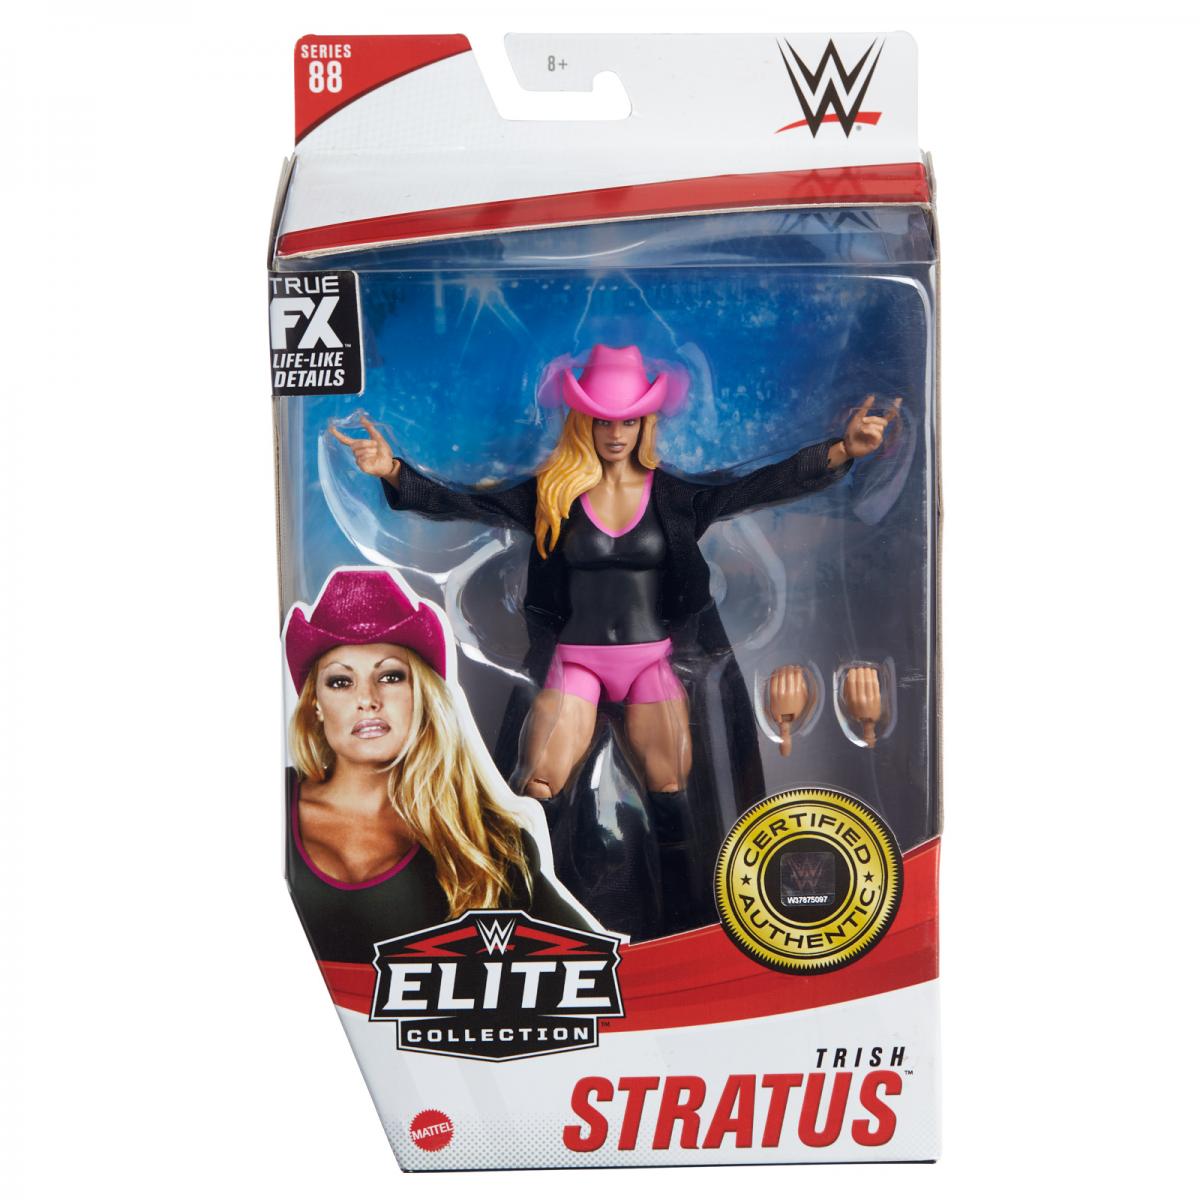 WWE Mattel Elite Collection Series 88 Trish Stratus